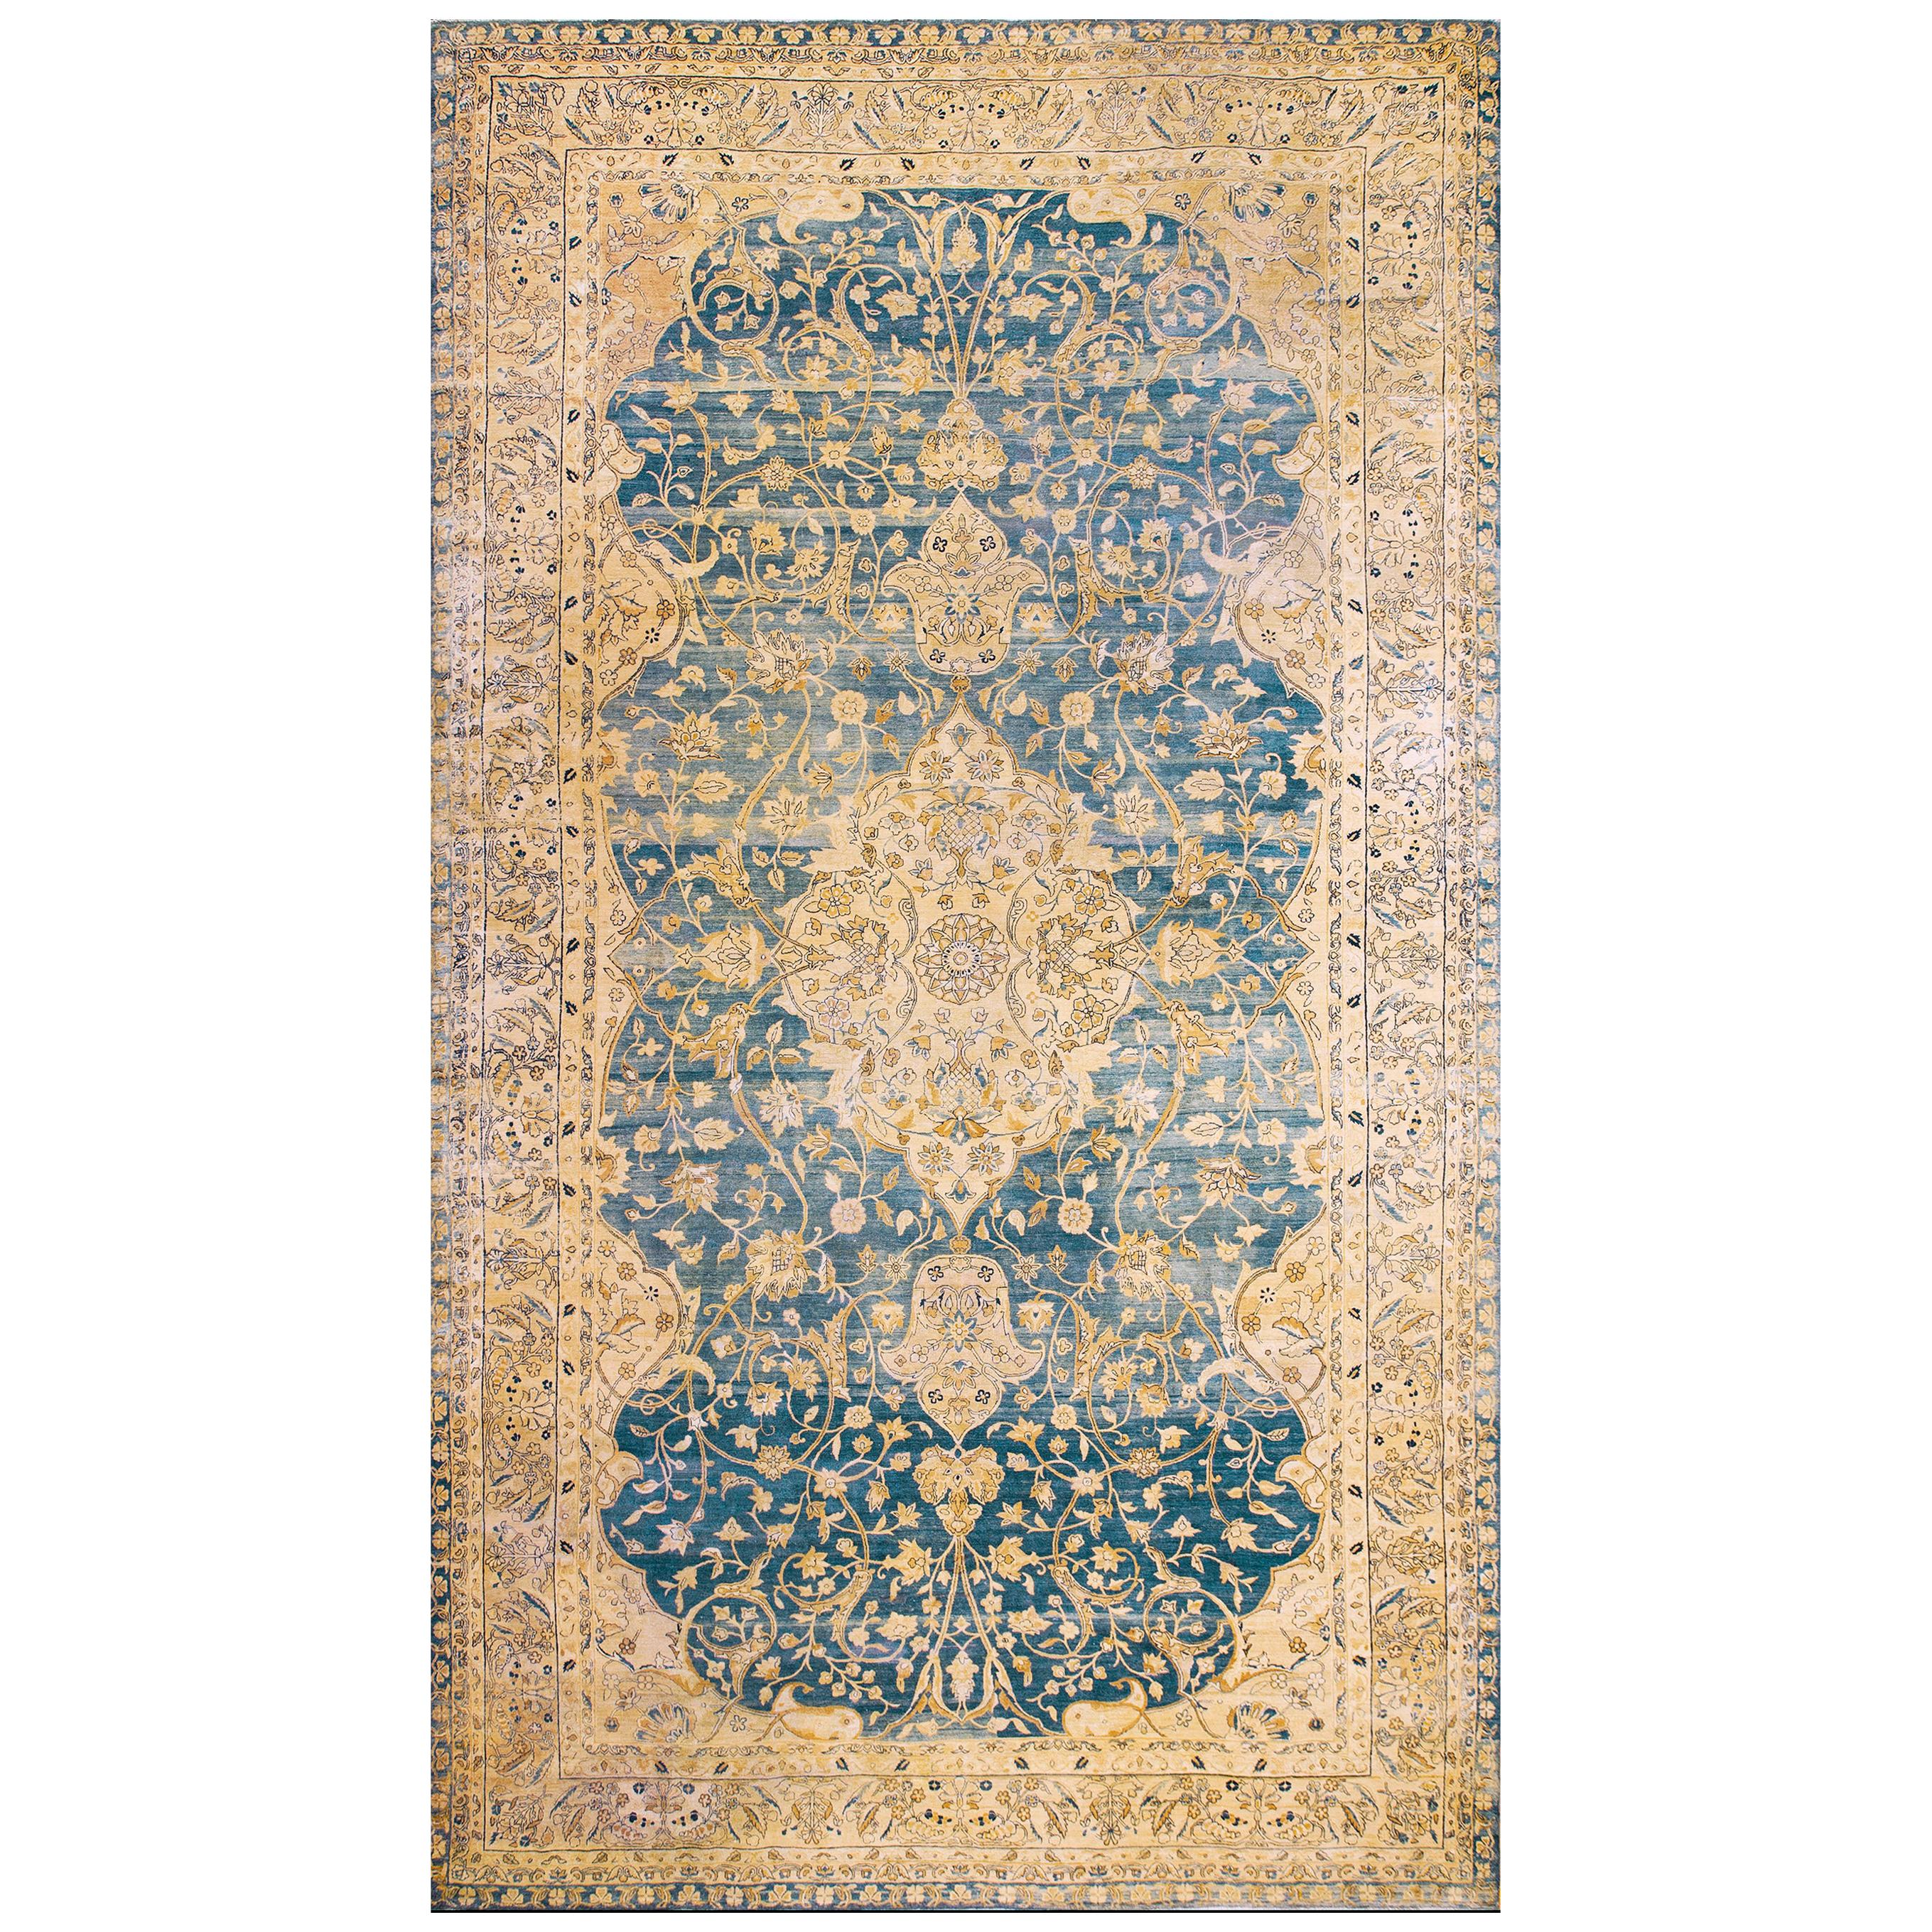 Early 20th Century S.E. Persian Kerman Carpet ( 9'9" x 17'6" - 297 x 533 )